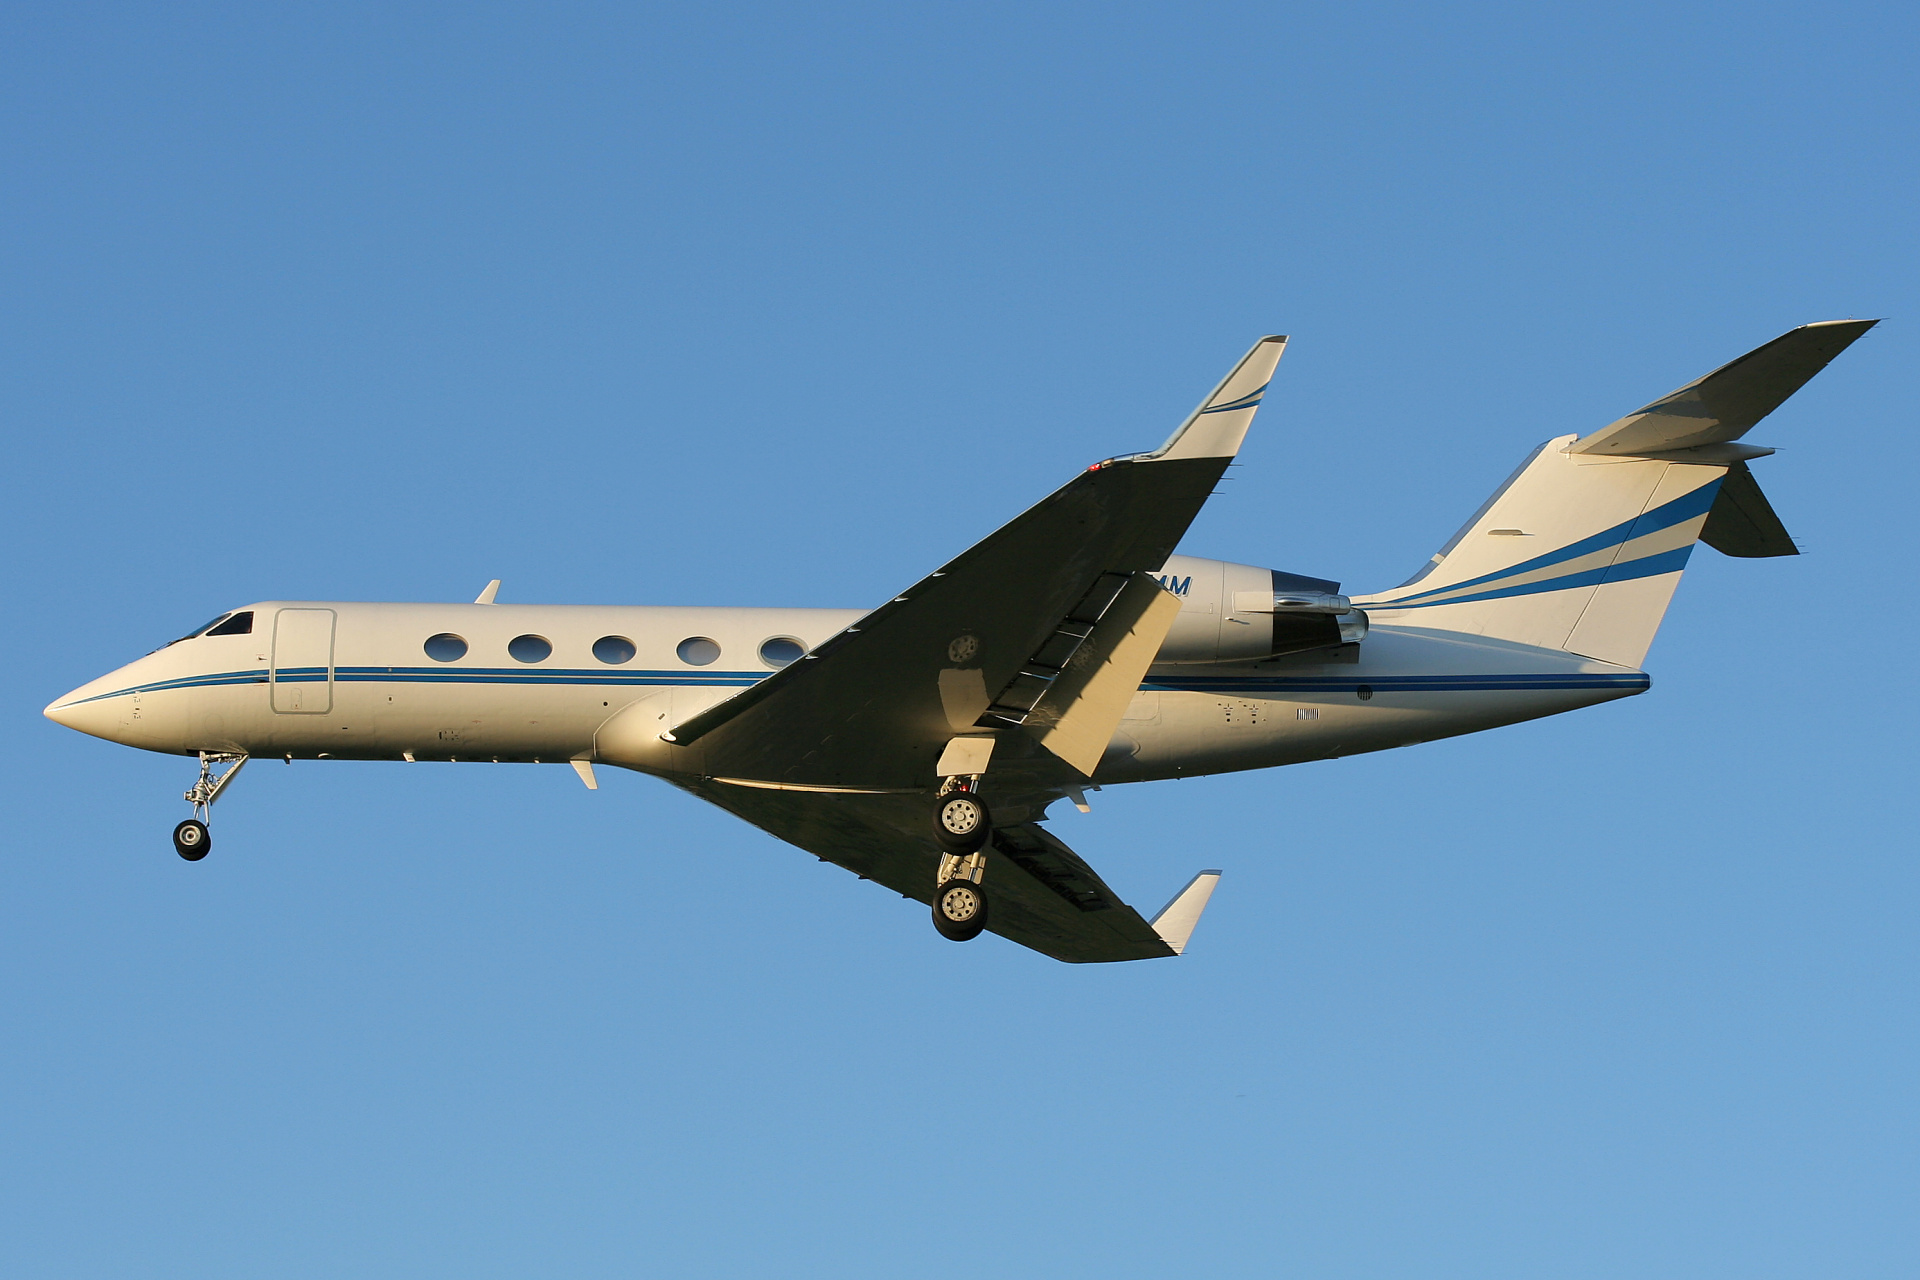 338MM, private (Aircraft » EPWA Spotting » Gulfstream IV)